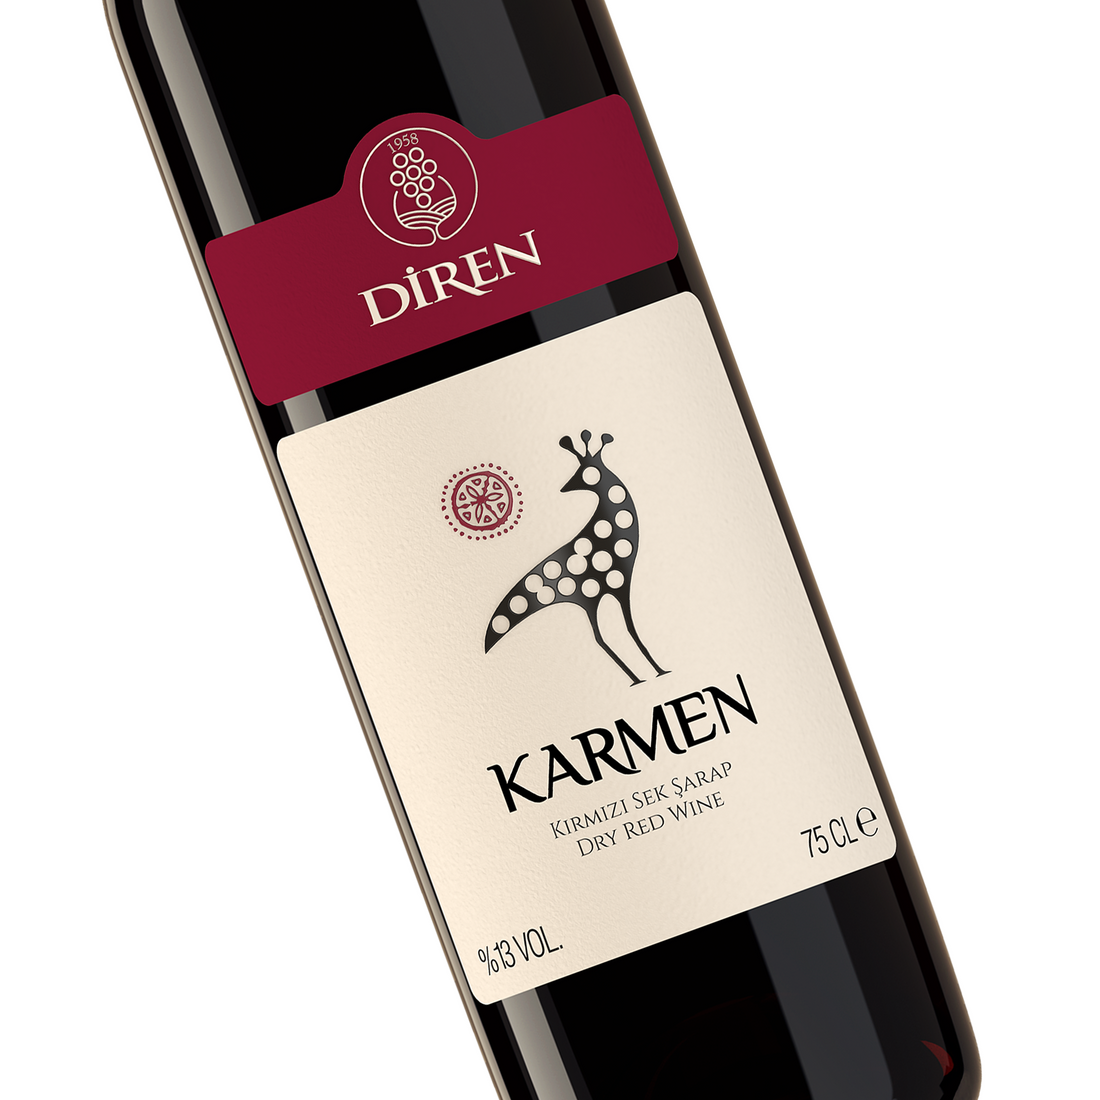 Diren Karmen Red 750ml Dry Turkish Wine | Diren Karmen Kirmizi Sek Sarap | Dry Red Wine